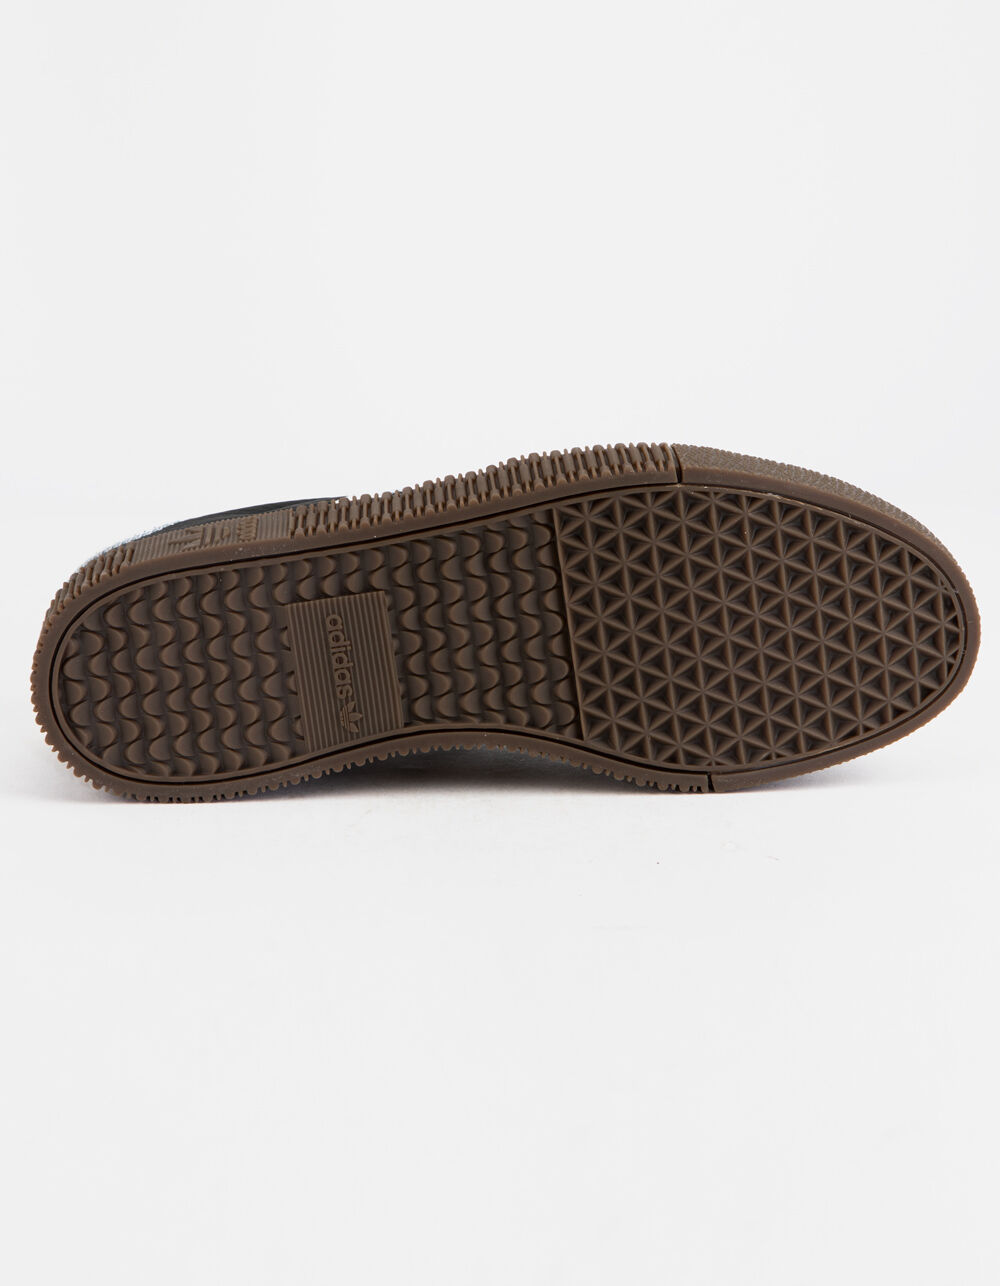 ADIDAS Sambarose Core Black & Gum Womens Shoes - CORE BLACK/GUM | Tillys